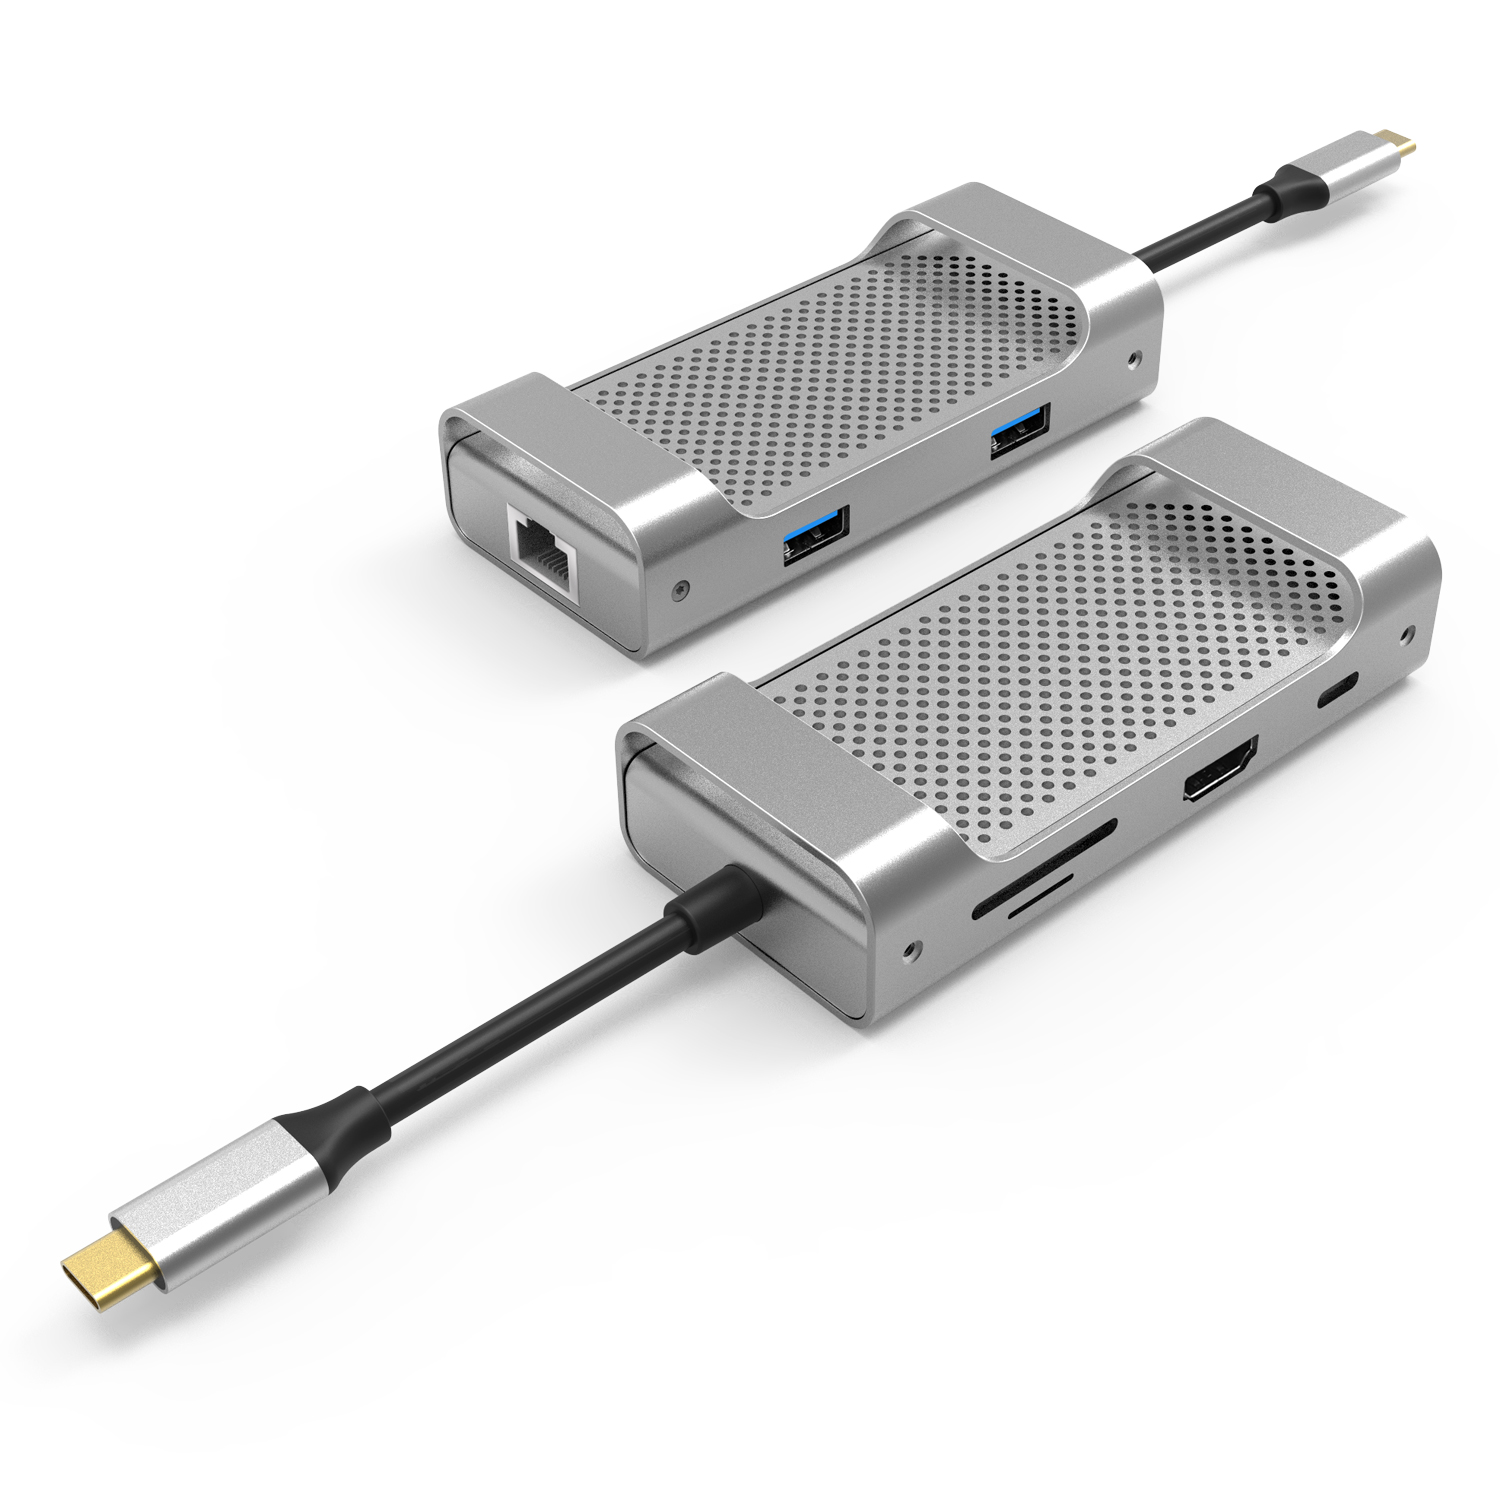 UC1301 USB-C HUB (1 x USB C / 2 x USB 3.0 / 1 x HDMI / SD/TF Card Reader / RJ45)